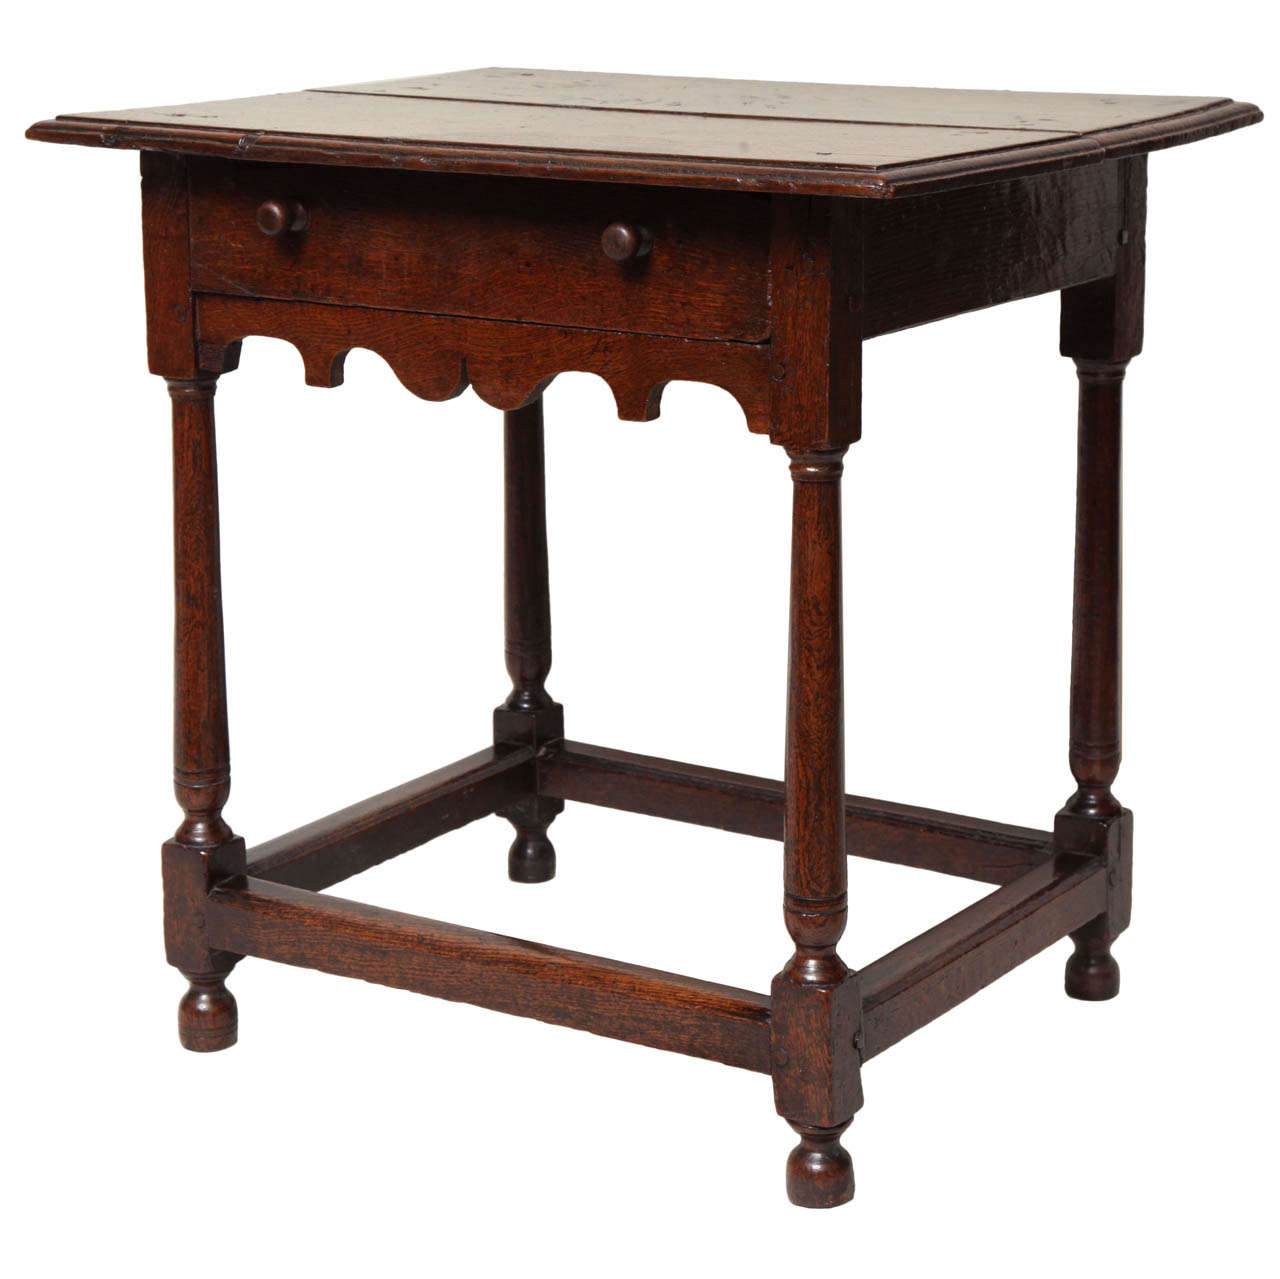 Early 18th Century English Oak Table